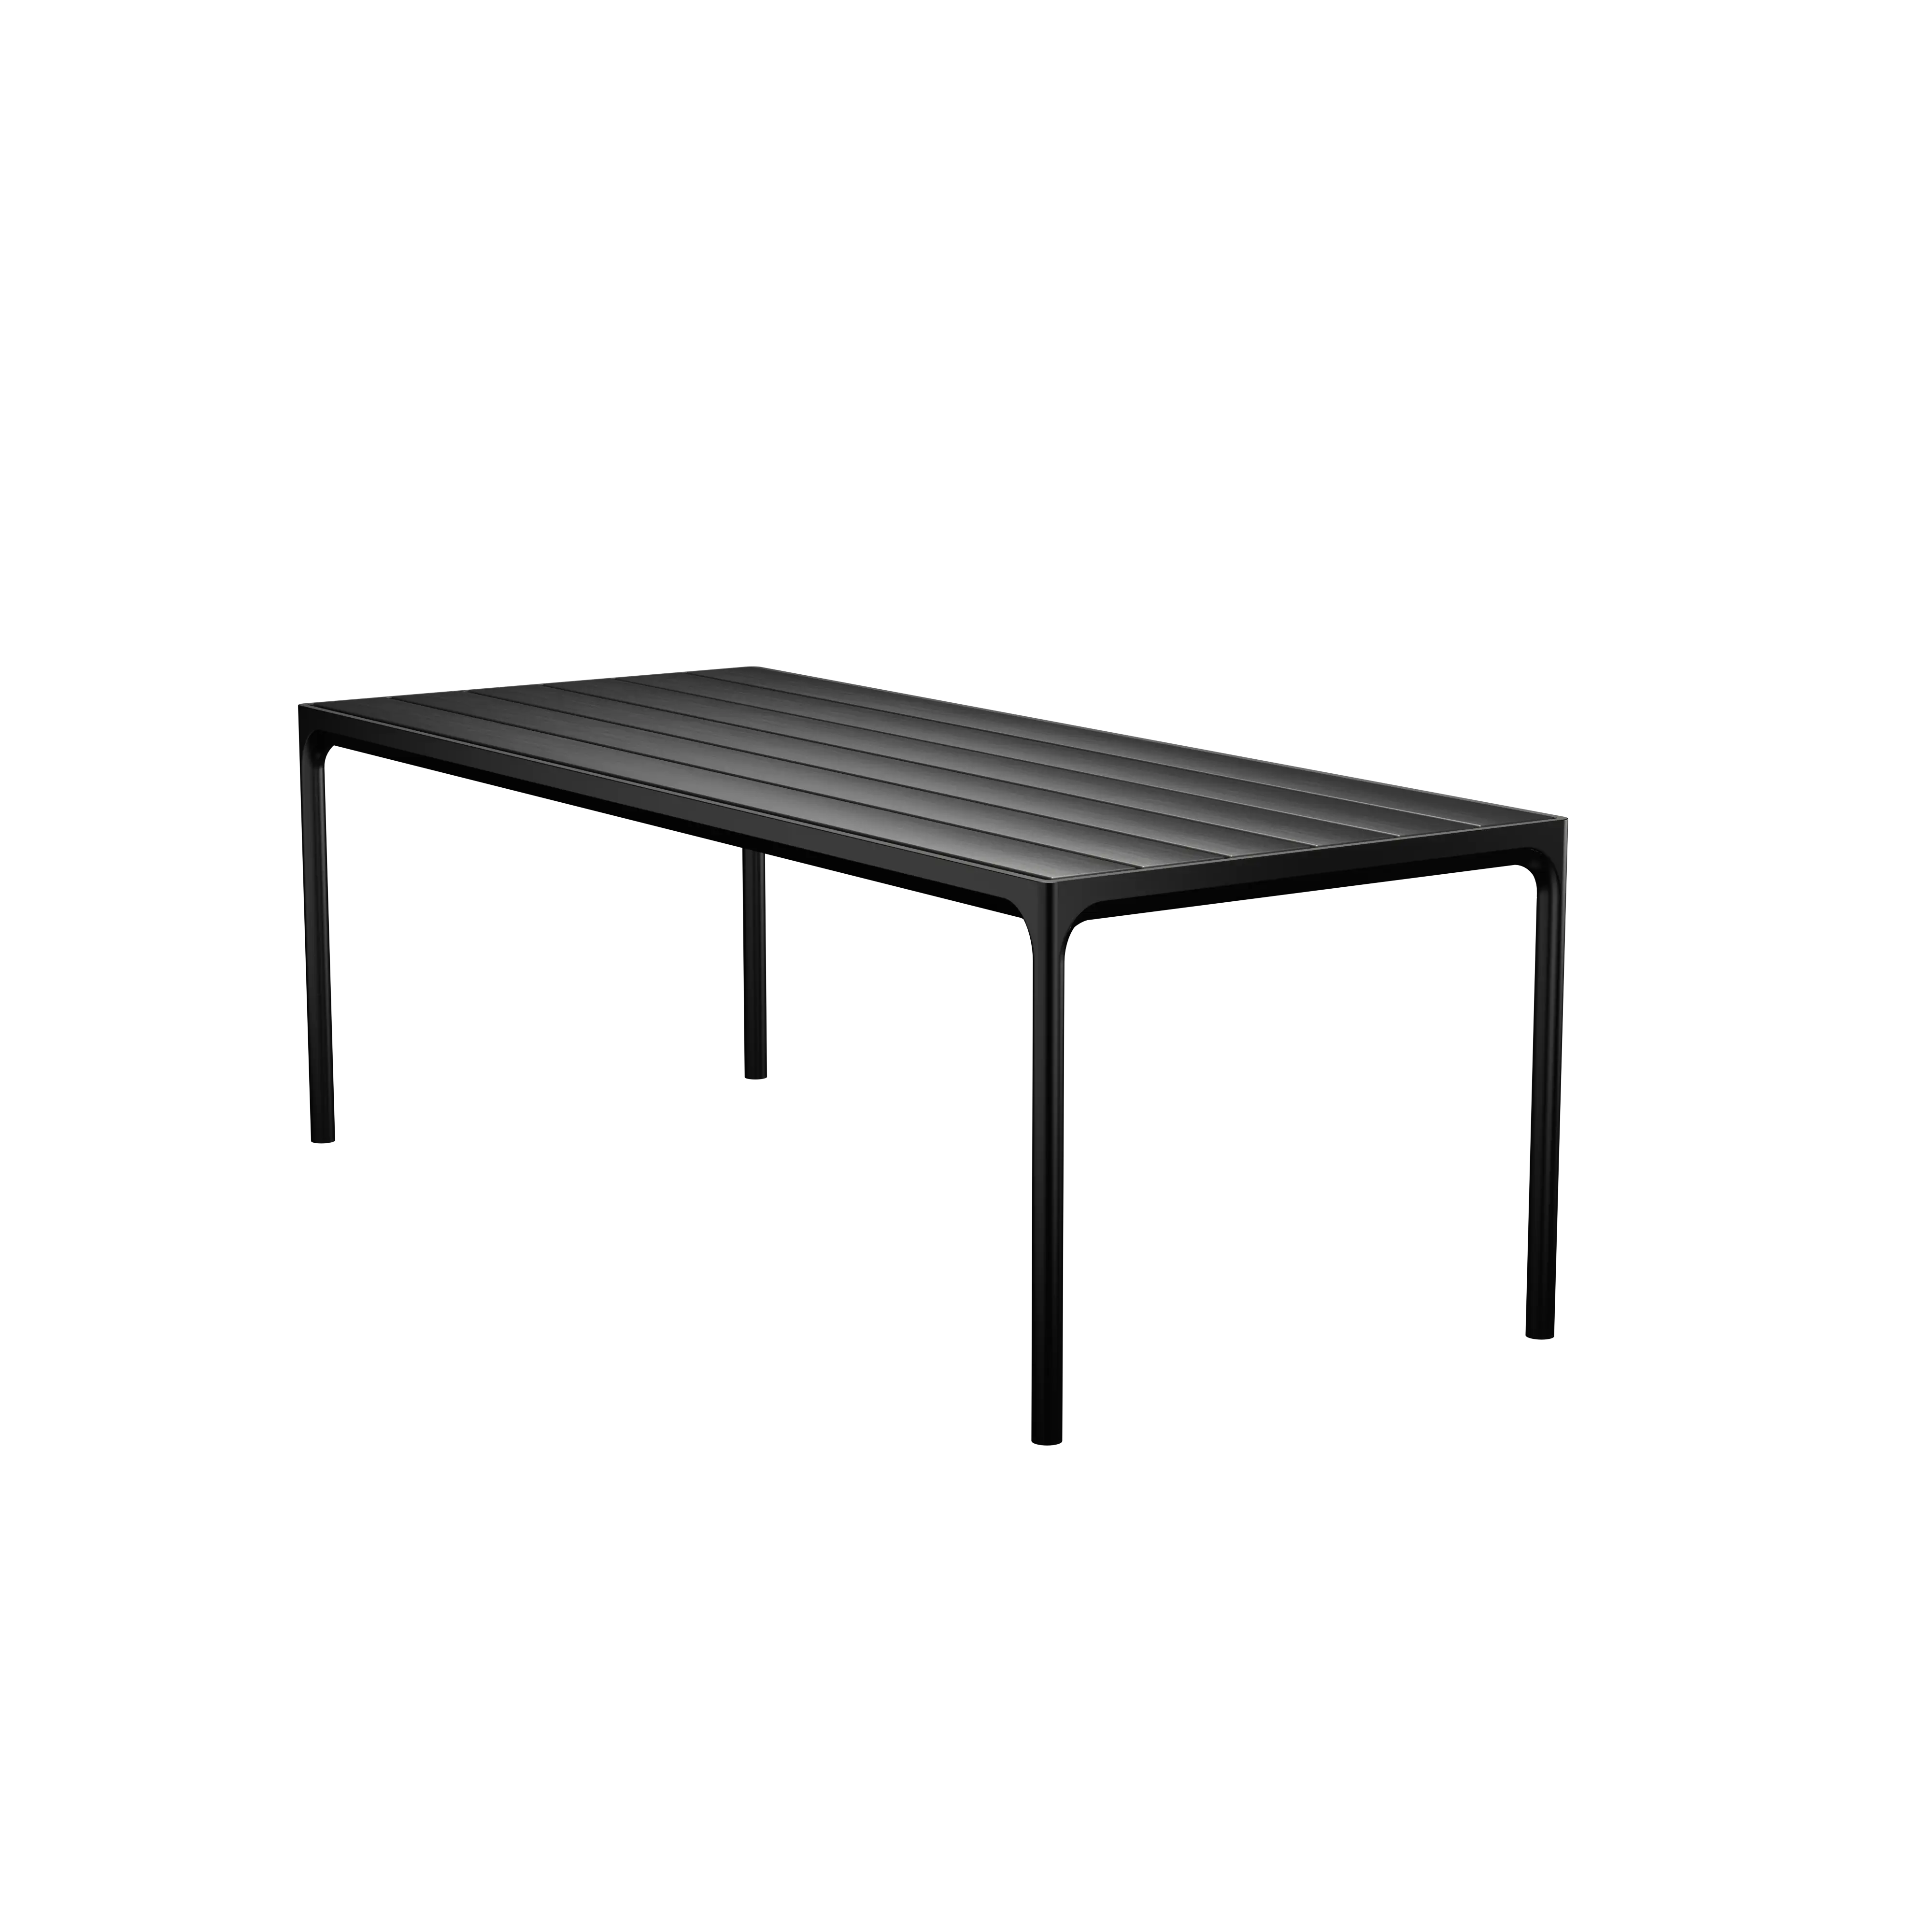 Four dining table 90 x 210 cm - Black, black